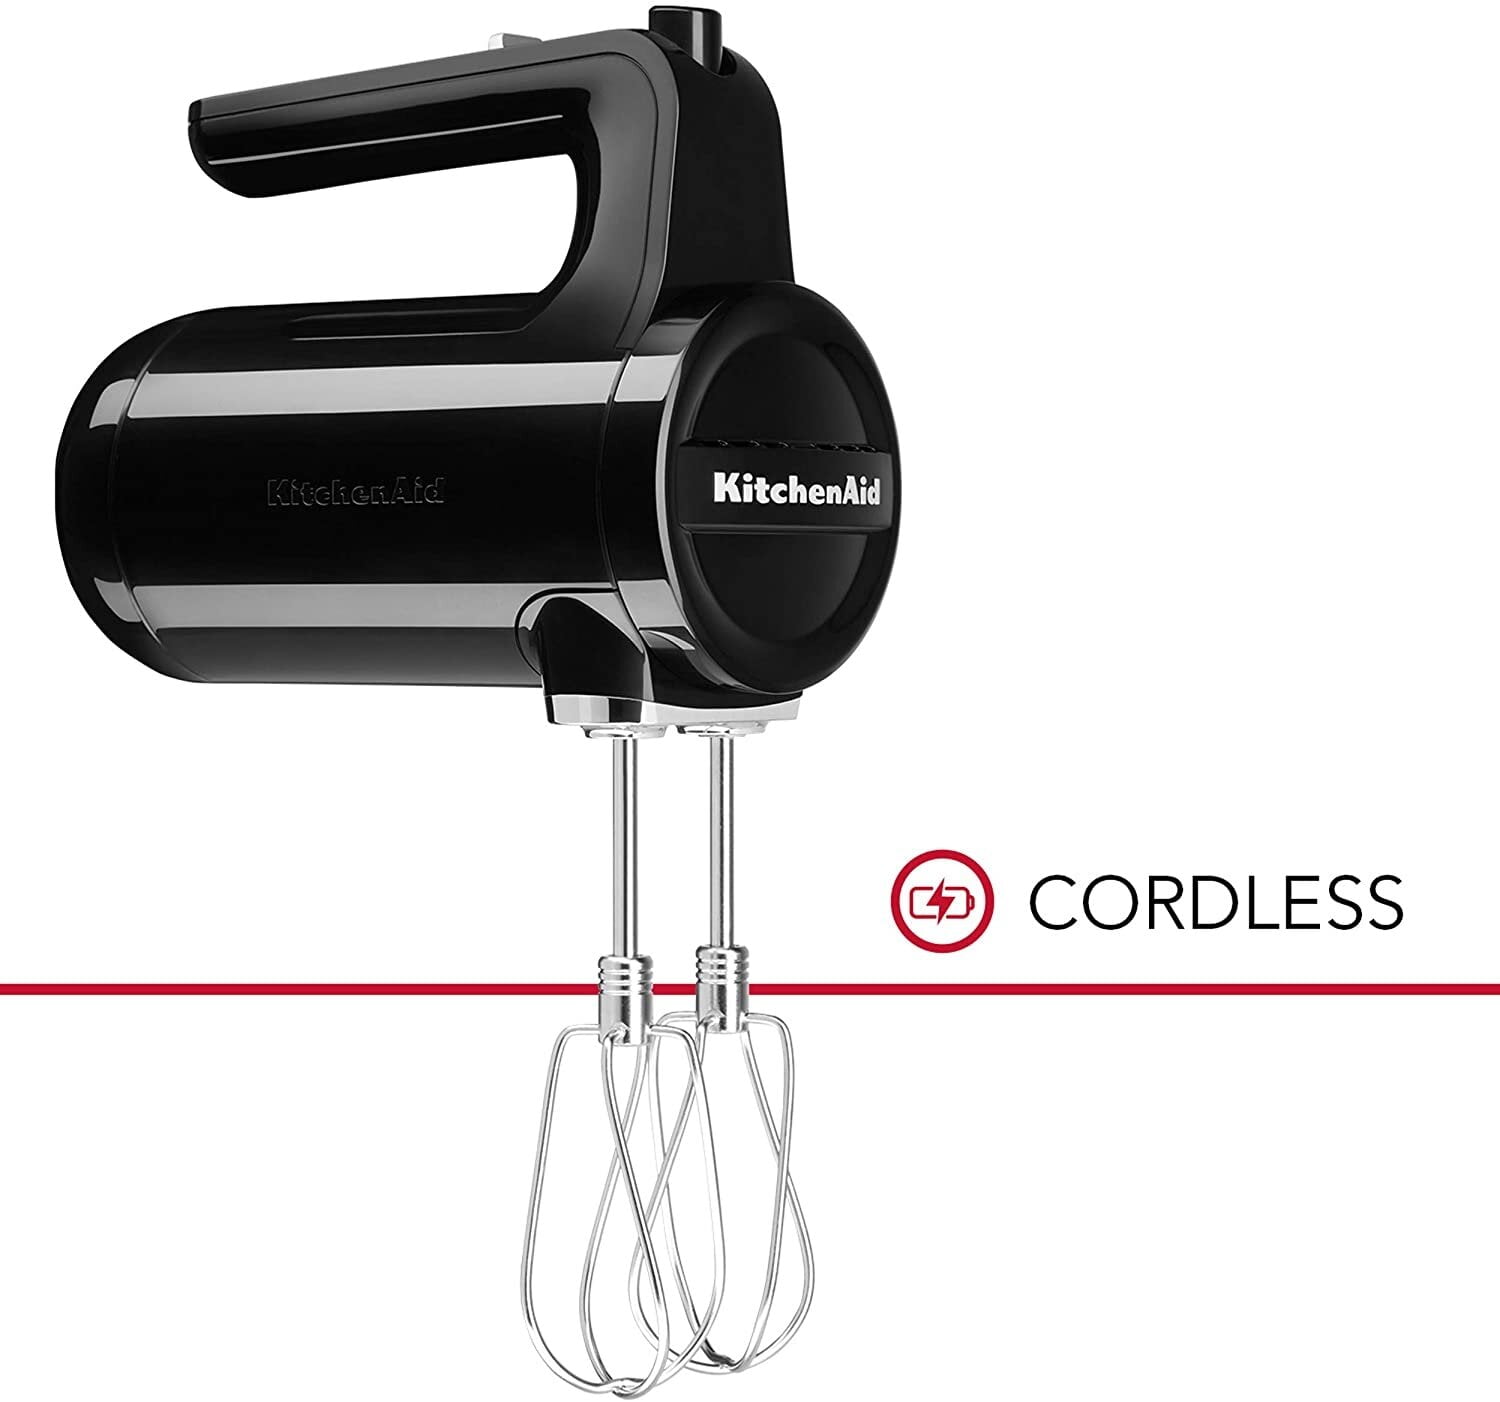 We Tried KitchenAid's New Cordless Appliances